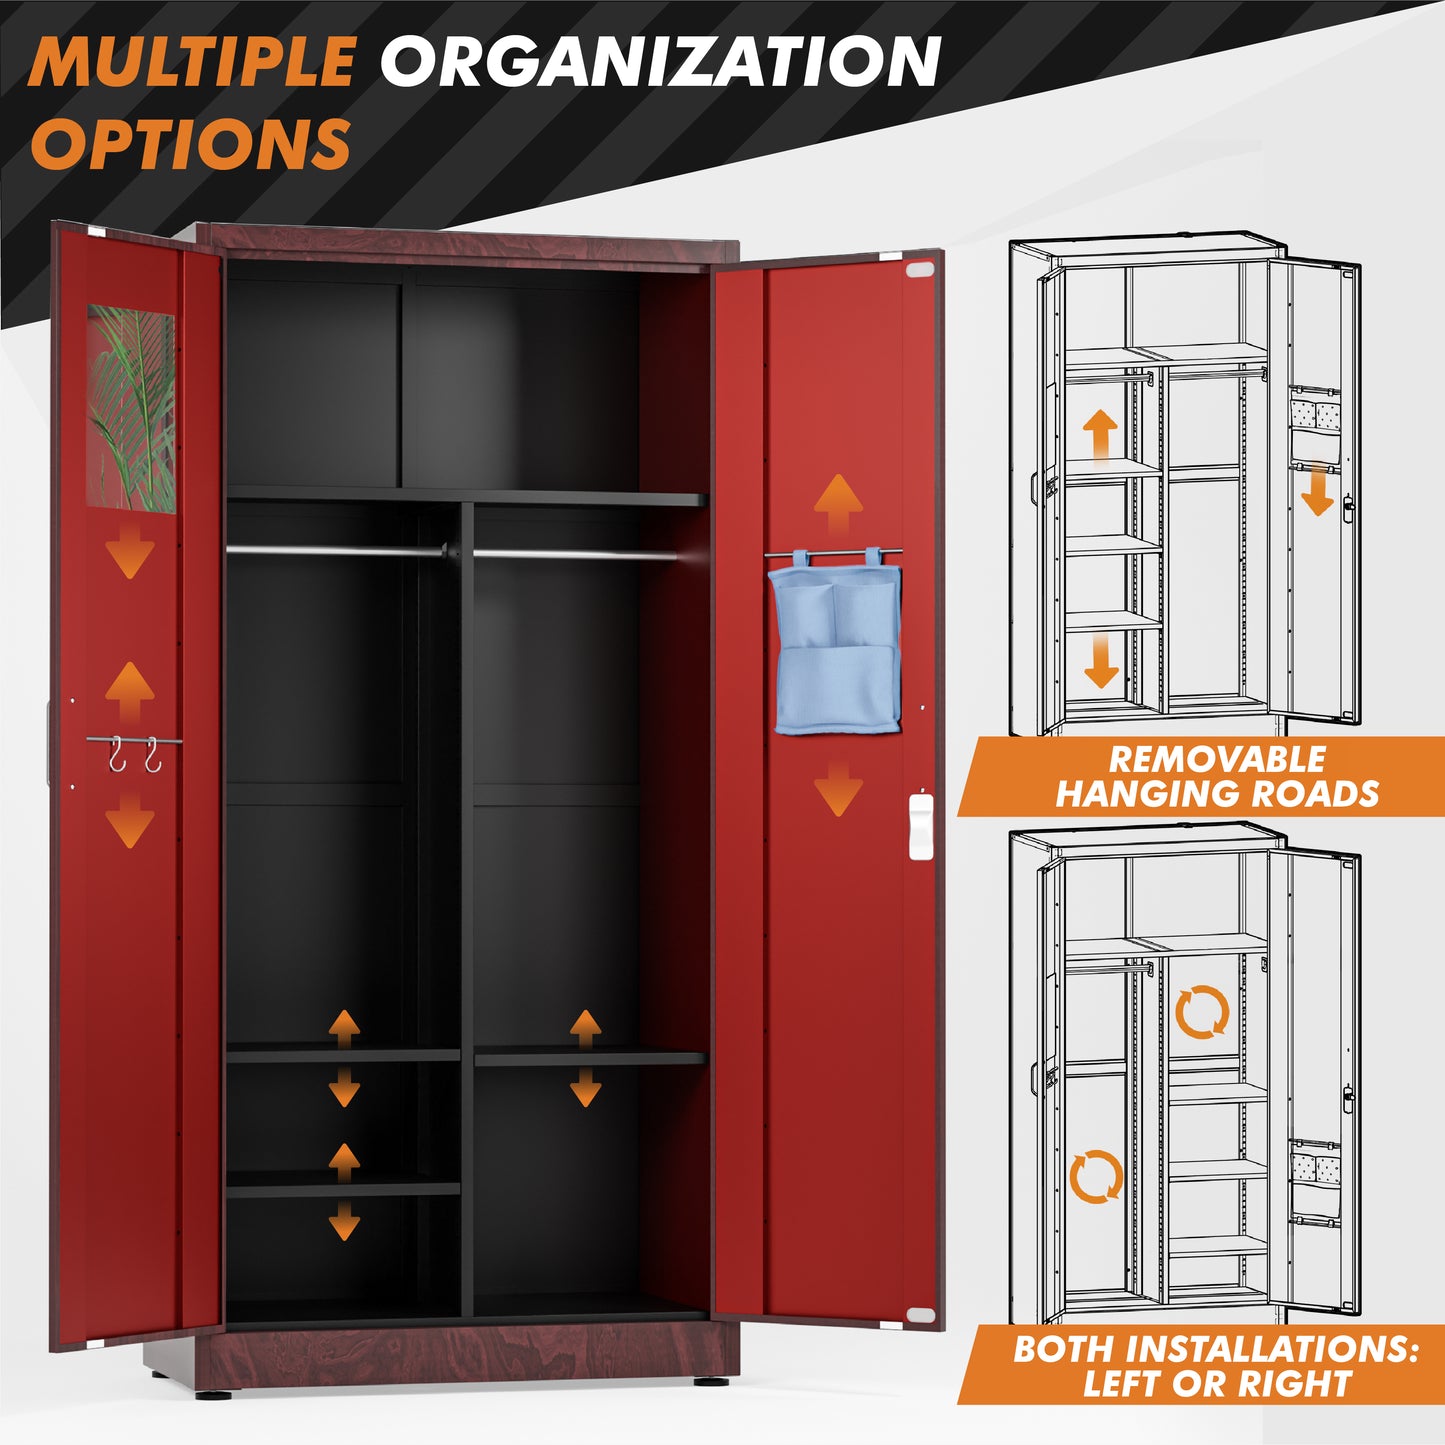 Wardrobe Metal Storage Cabinet - Metal Storage Locker with Locking Doors (Red Wood Grain)